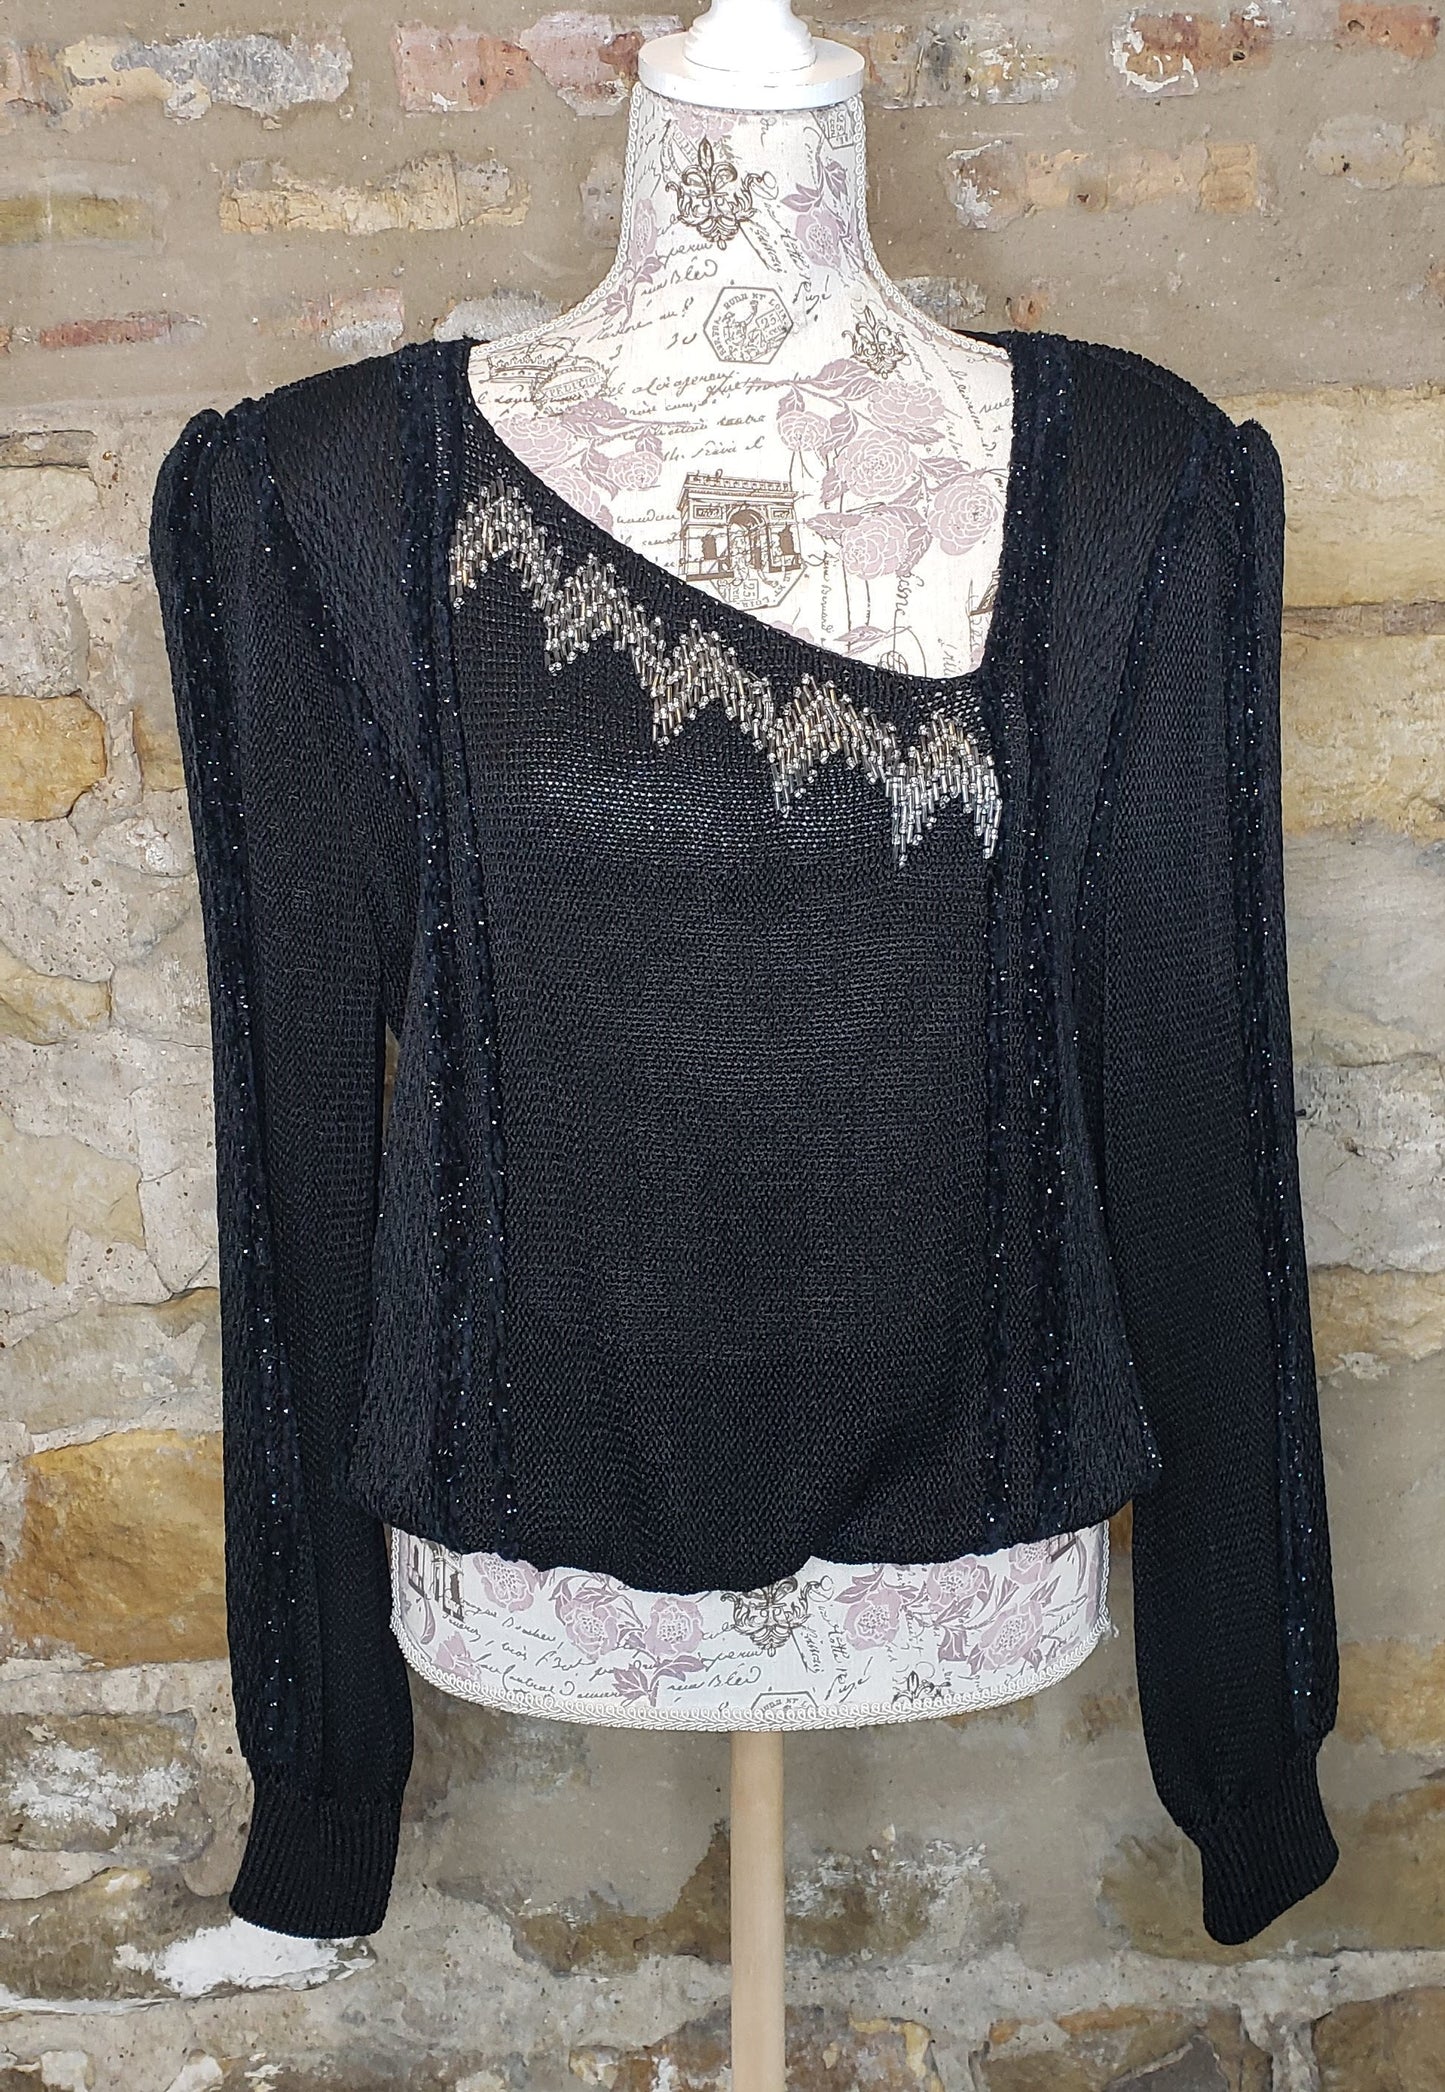 Brittony Brand Black Vintage Sweater Sz L